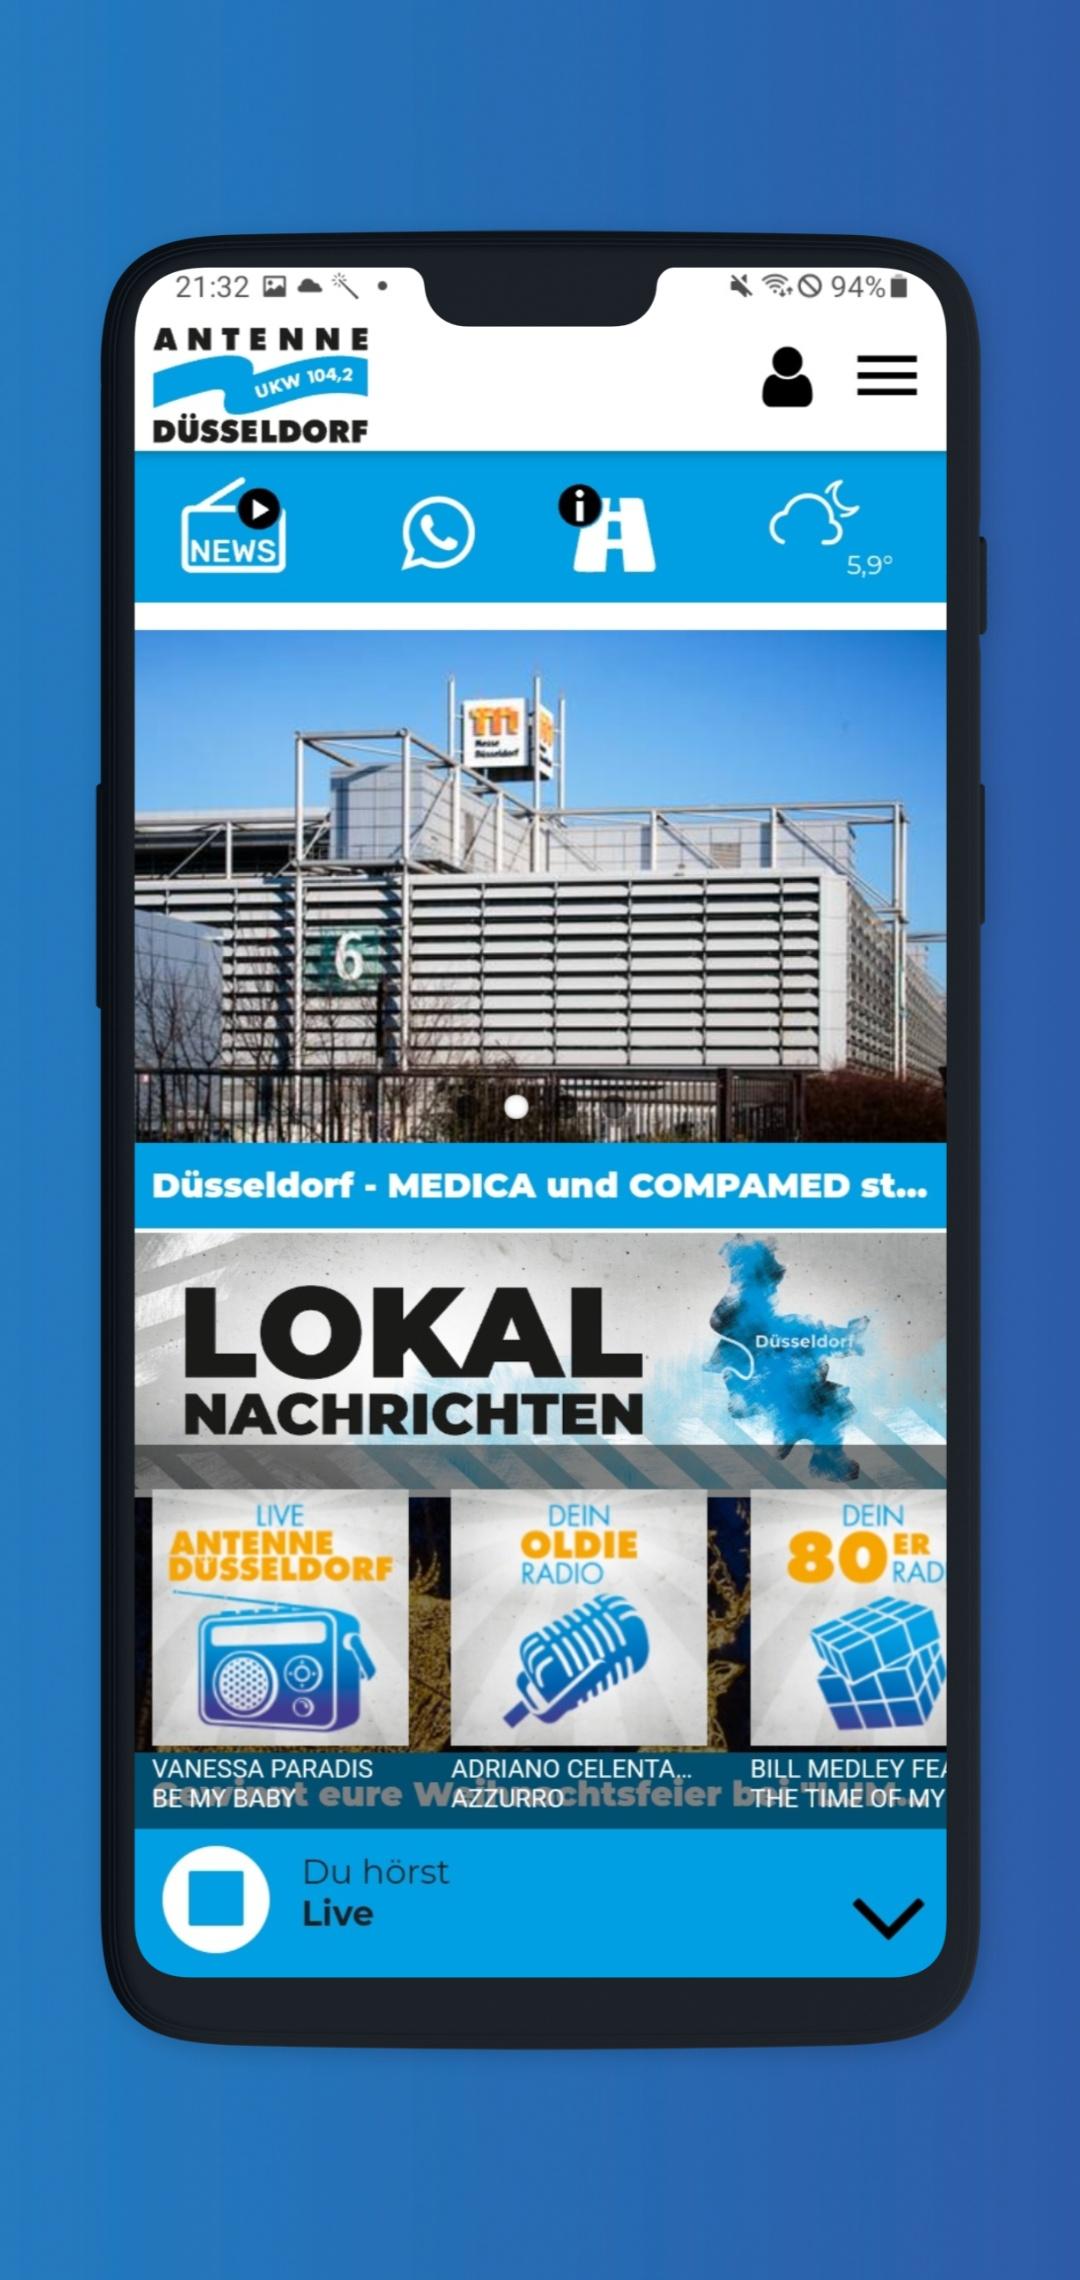 Antenne Düsseldorf for Android - APK Download